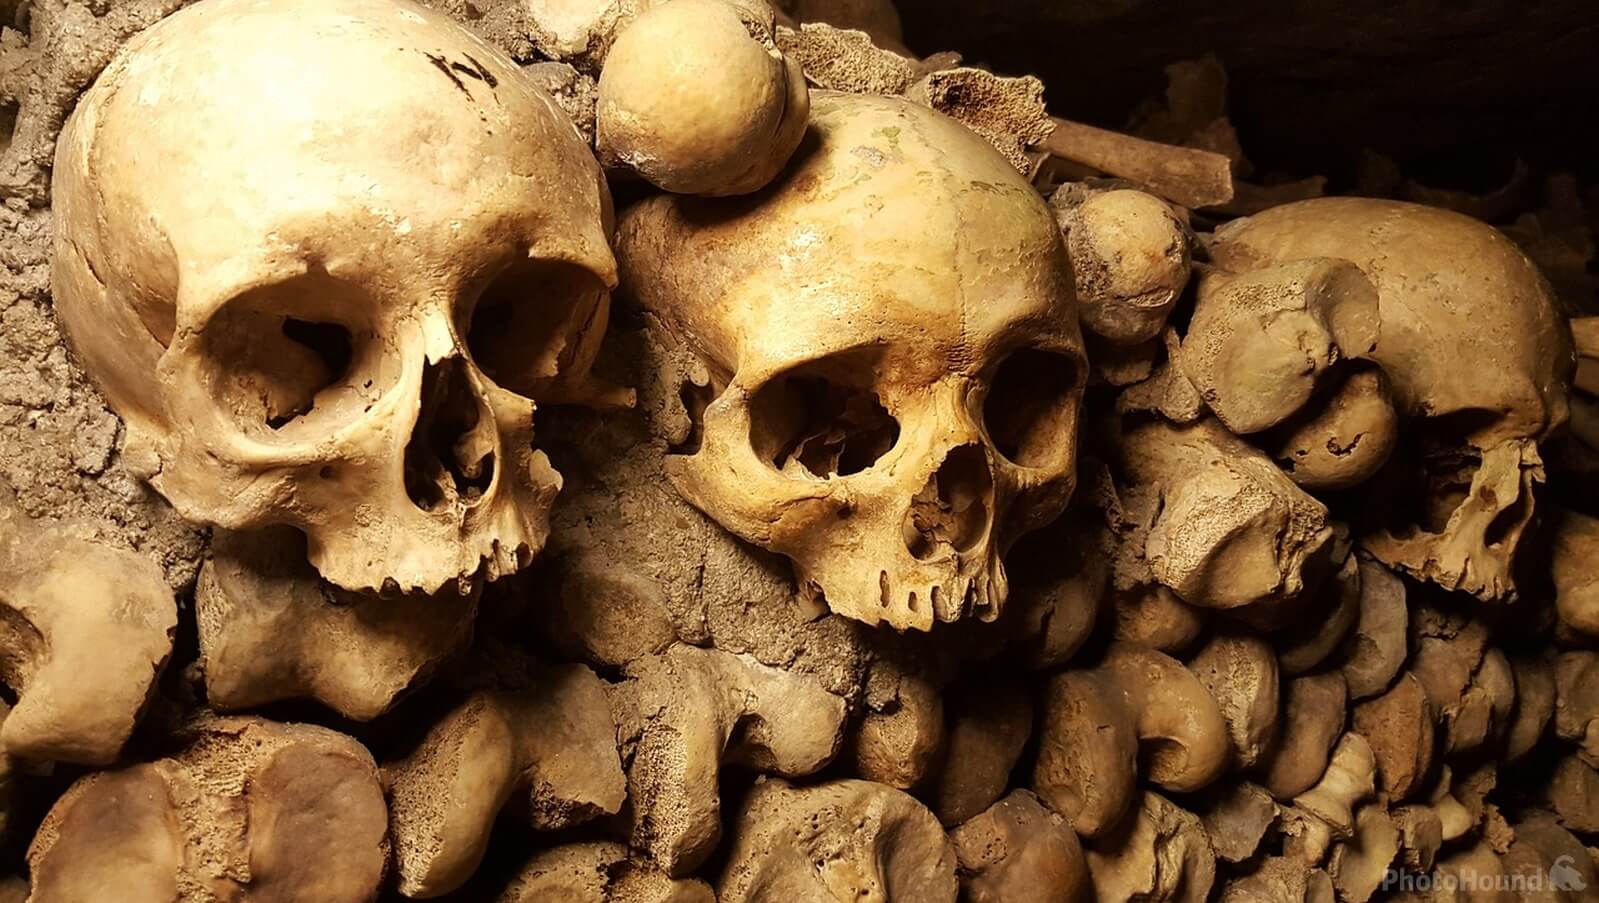 Image of Paris Catacombs by Team PhotoHound